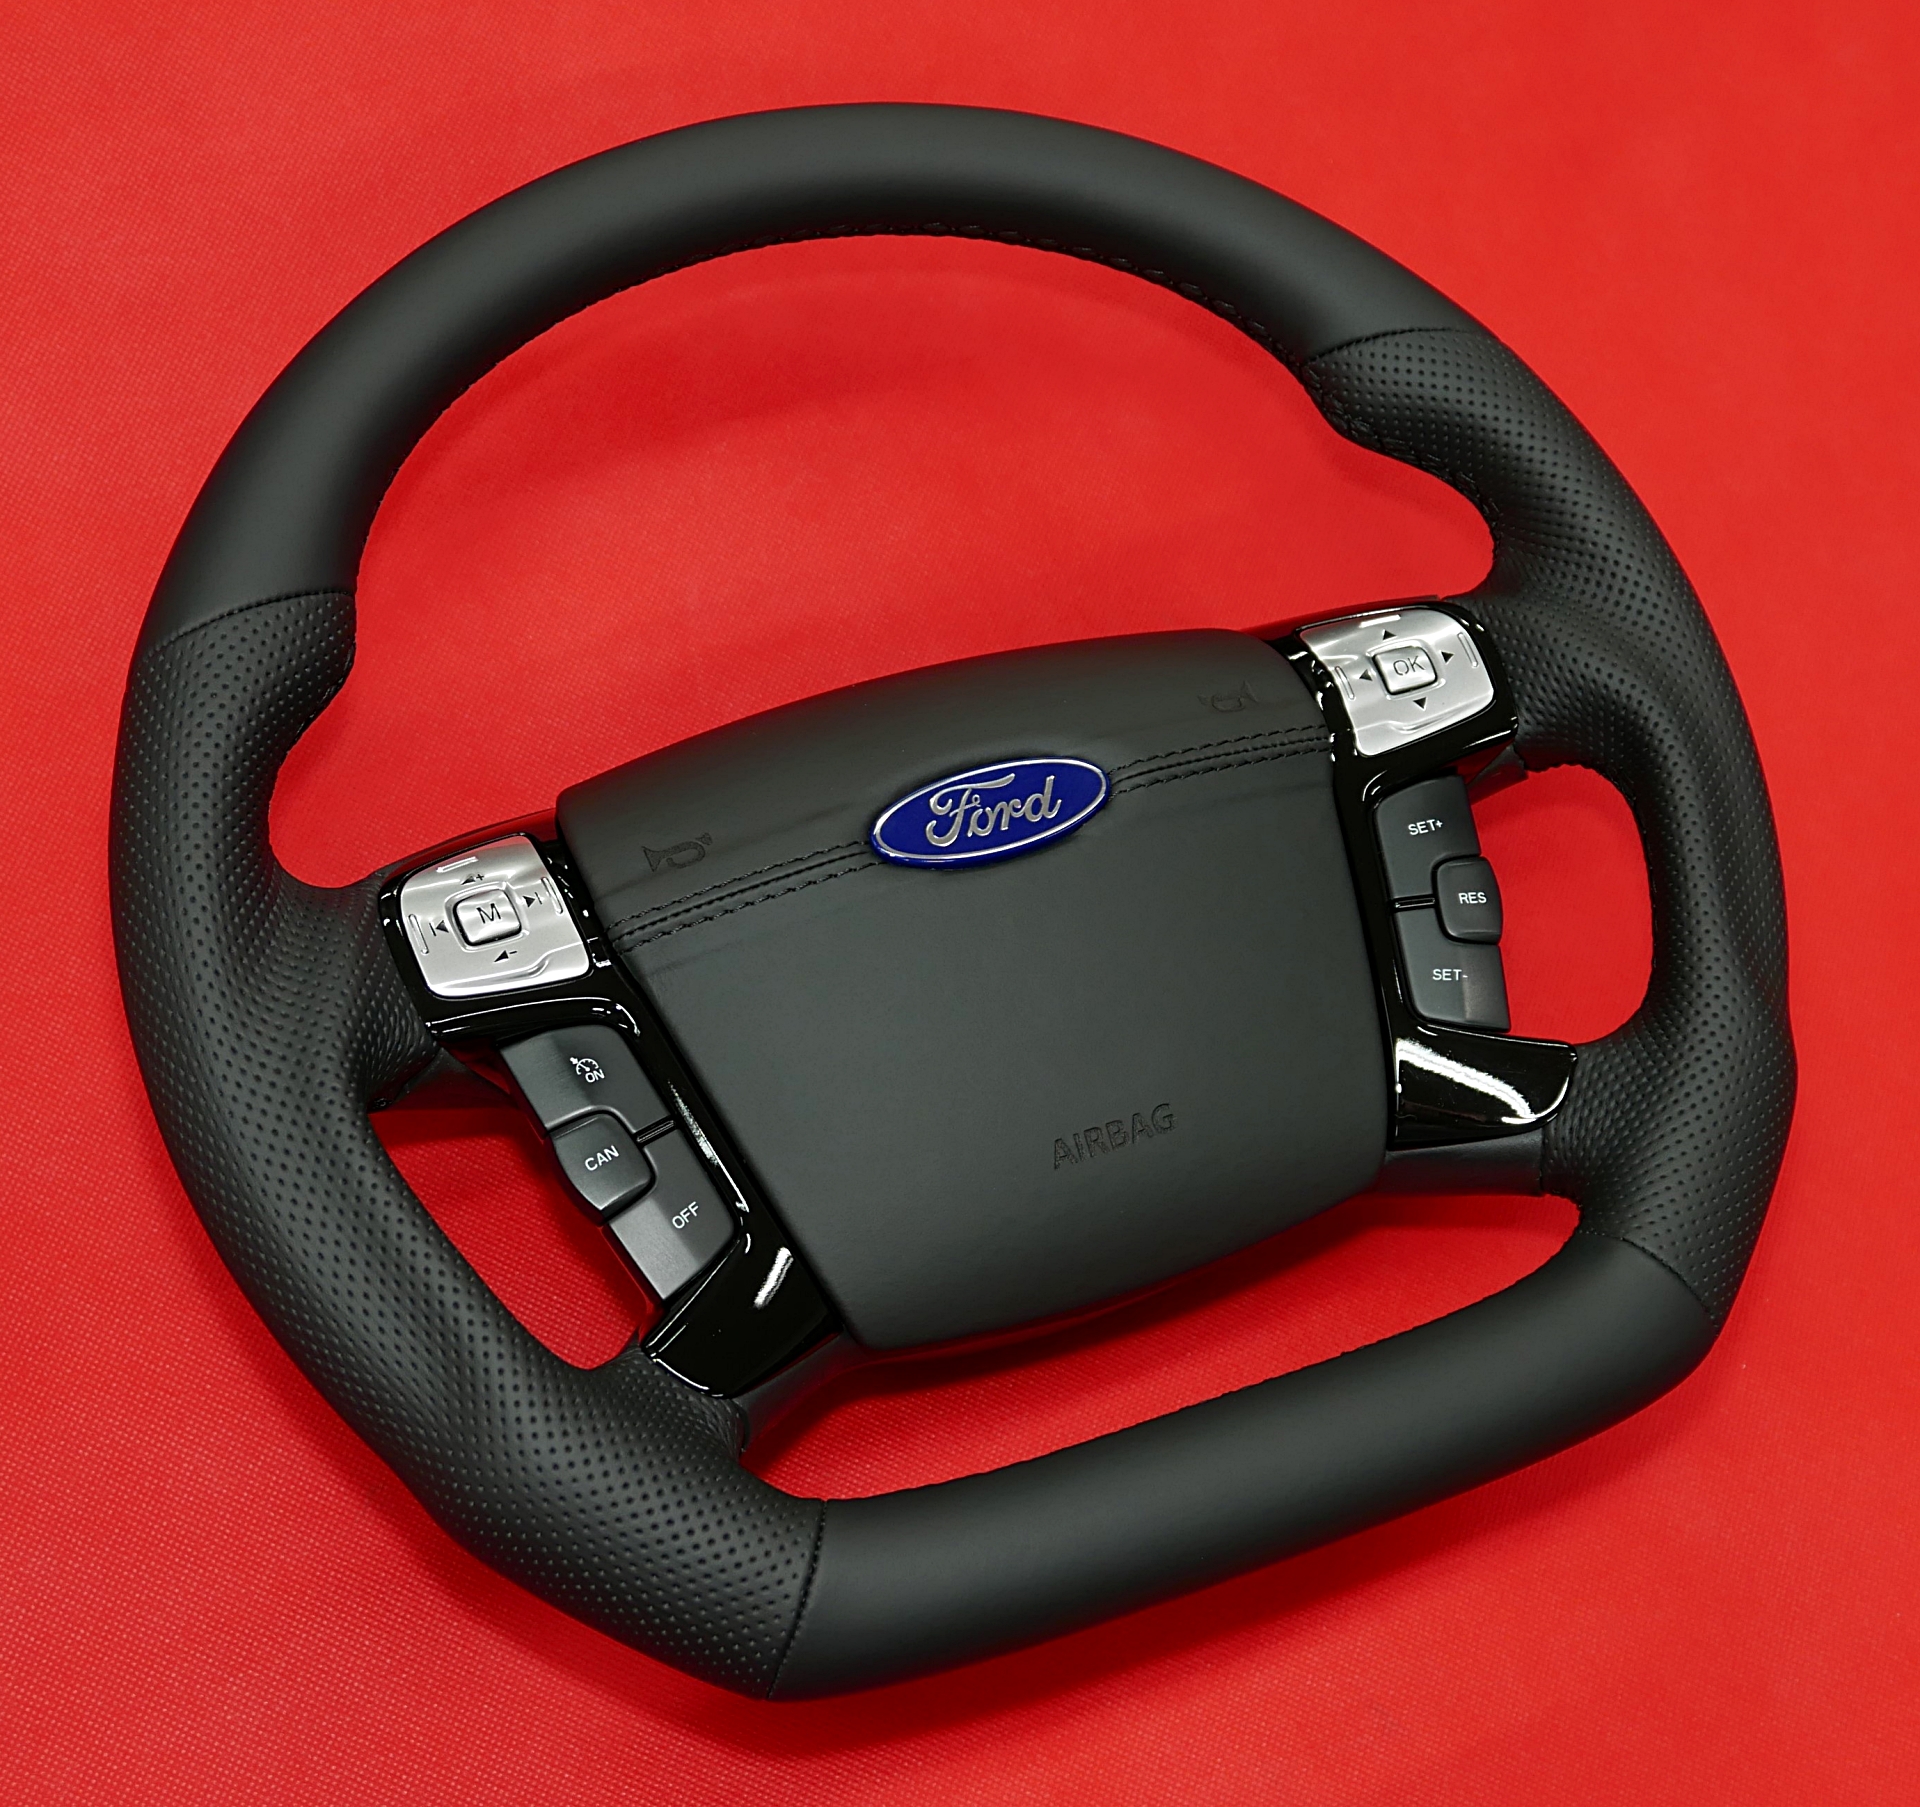 Ford Mondeo Galaxy custom modded steering wheel